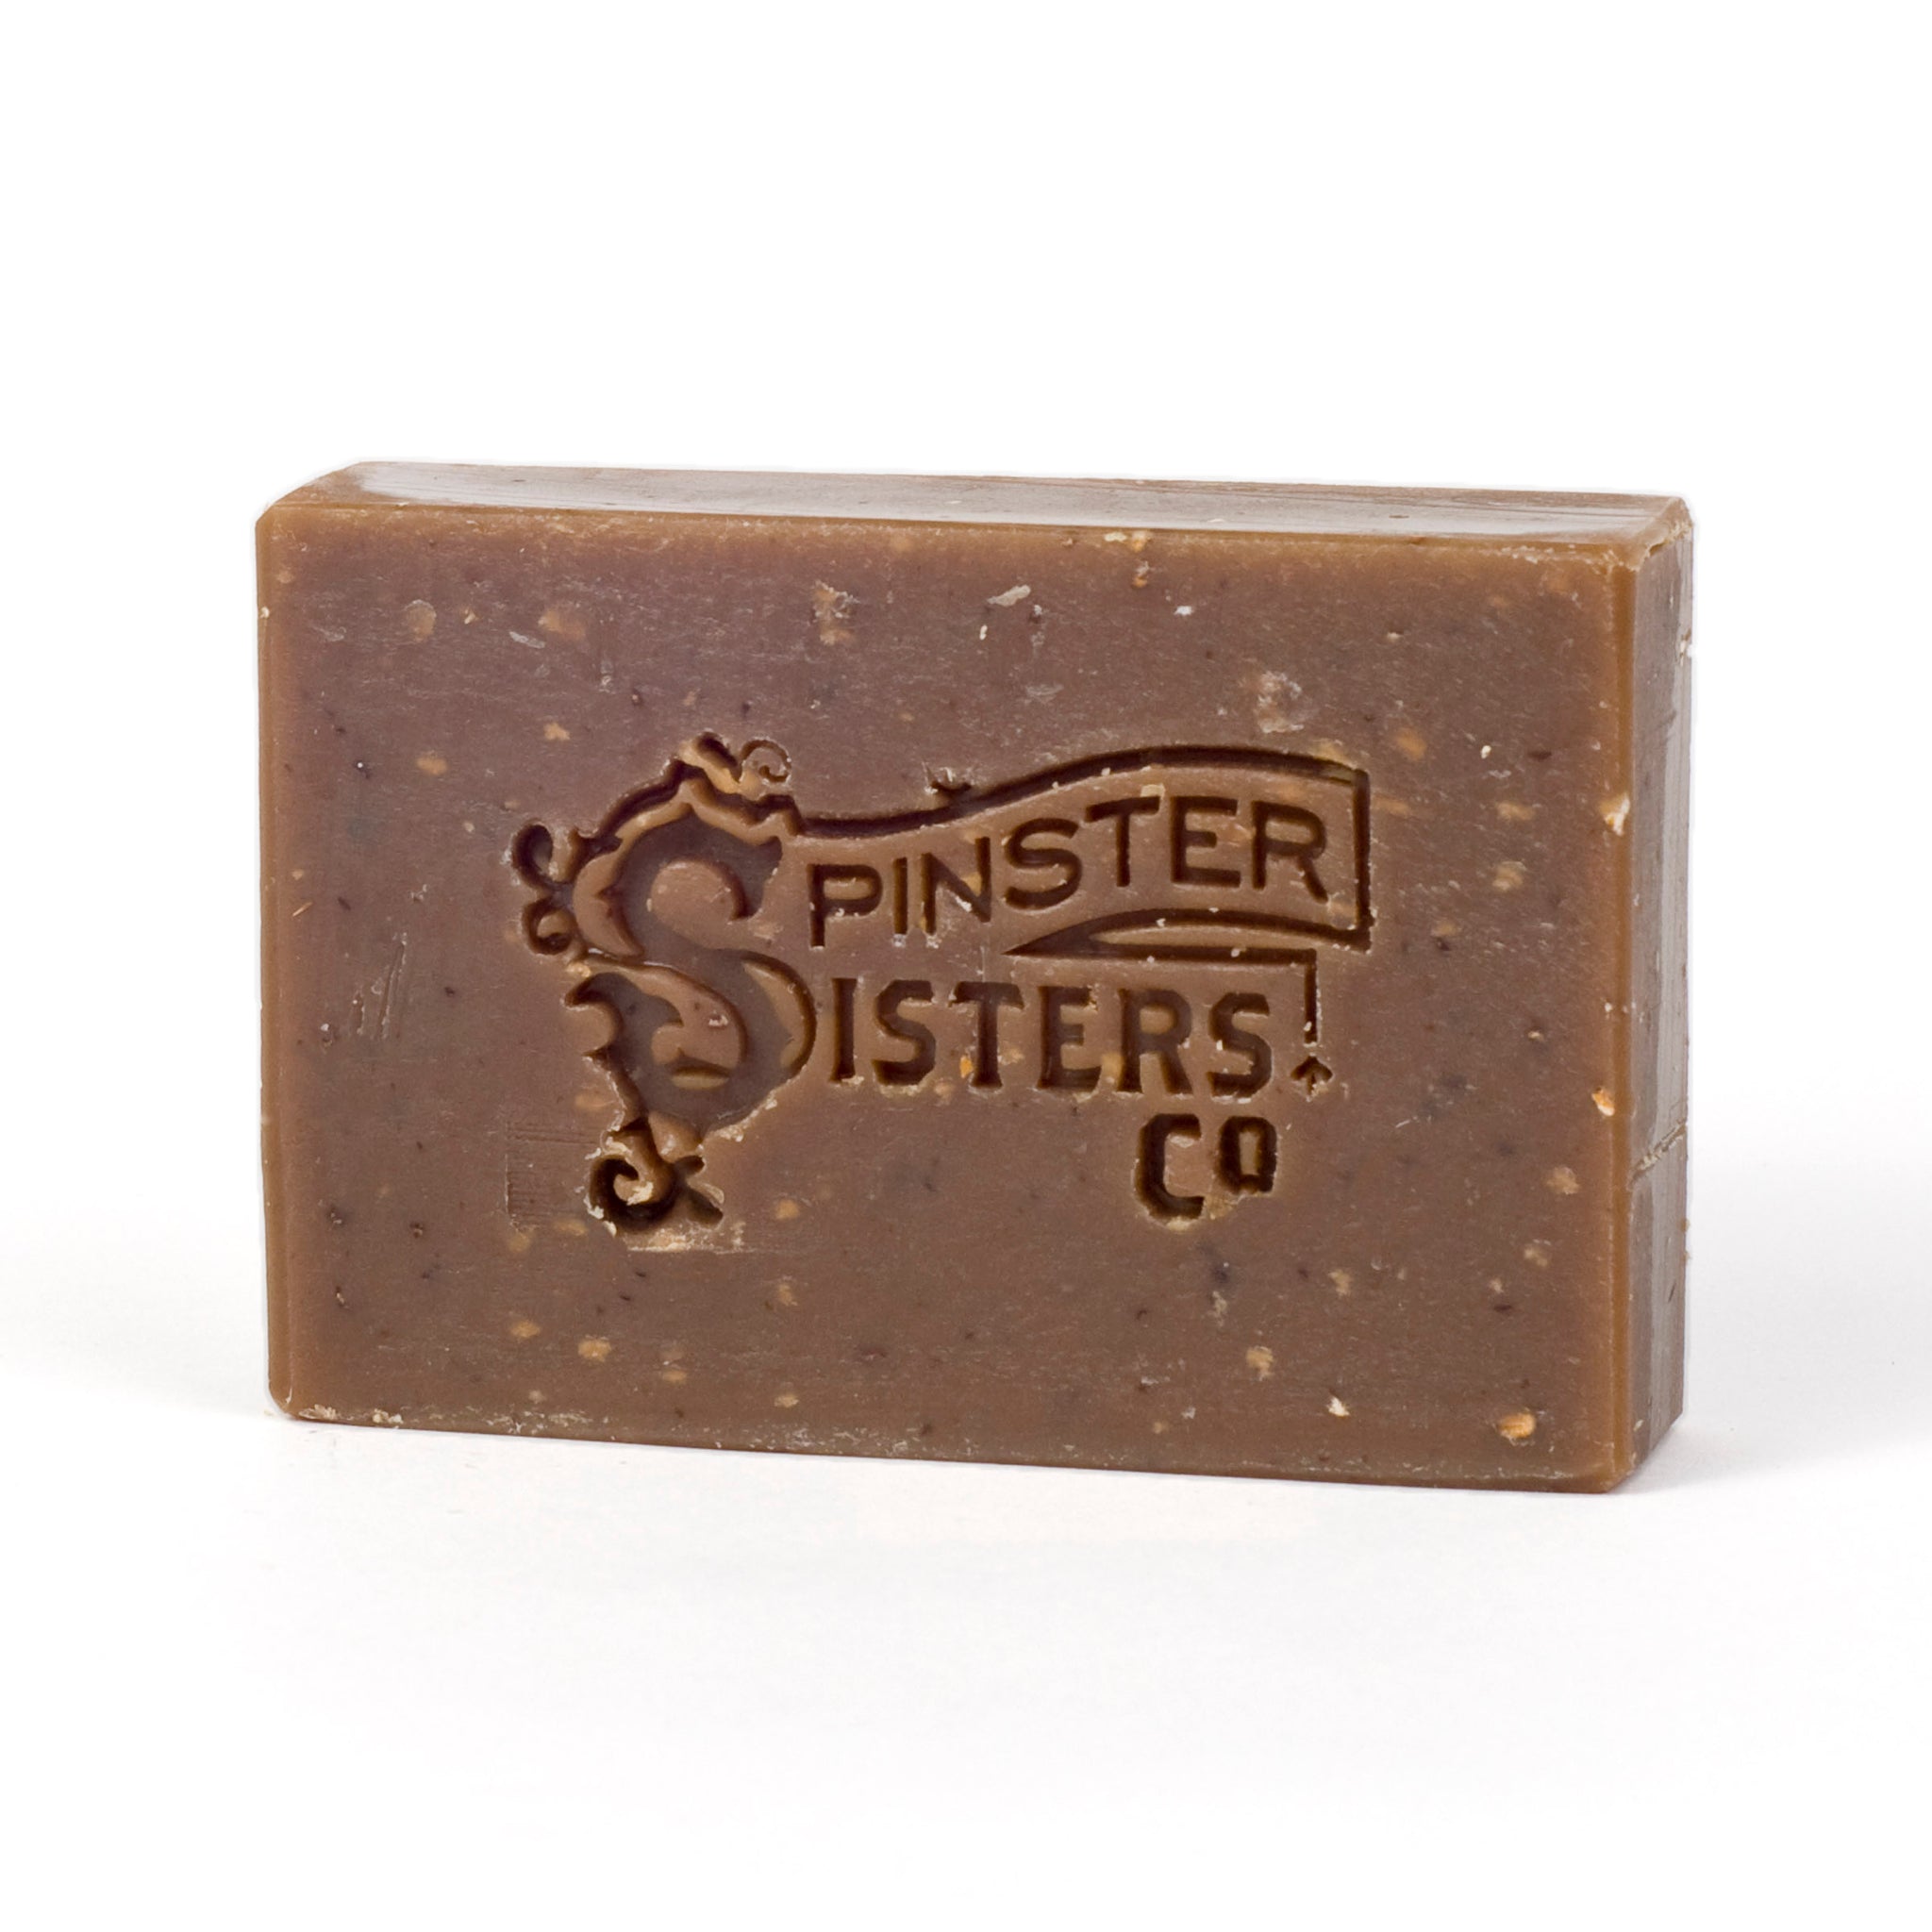 Naked Cedar Saffron soap with Spinster Sisters logo stamp